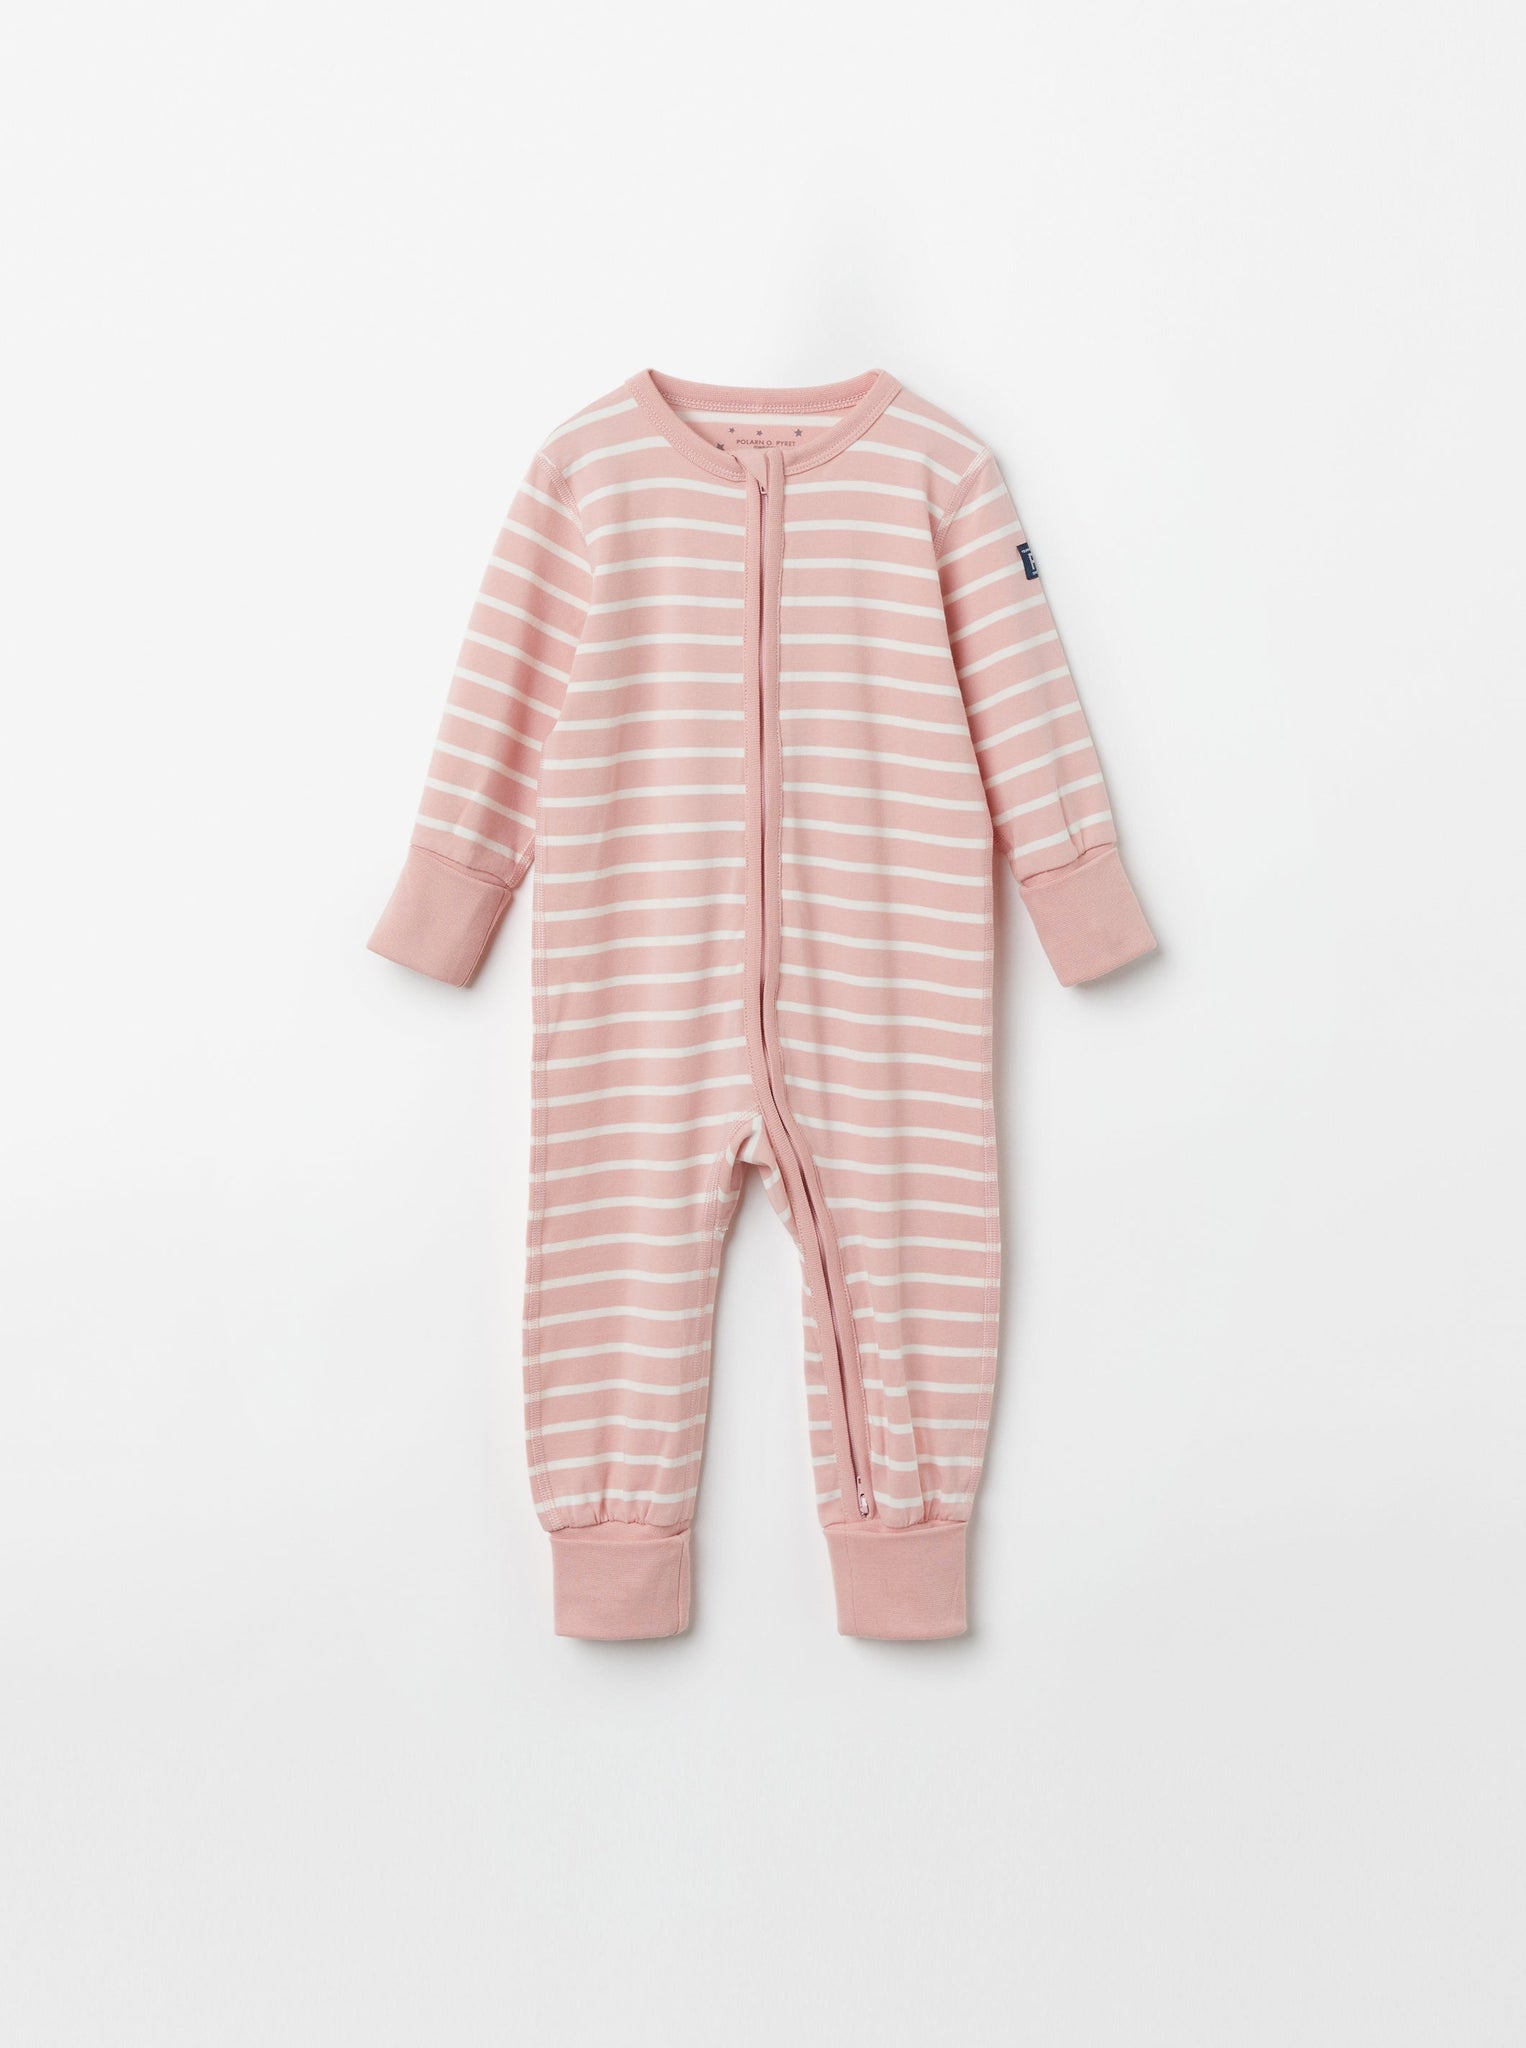 Striped Baby Sleepsuit